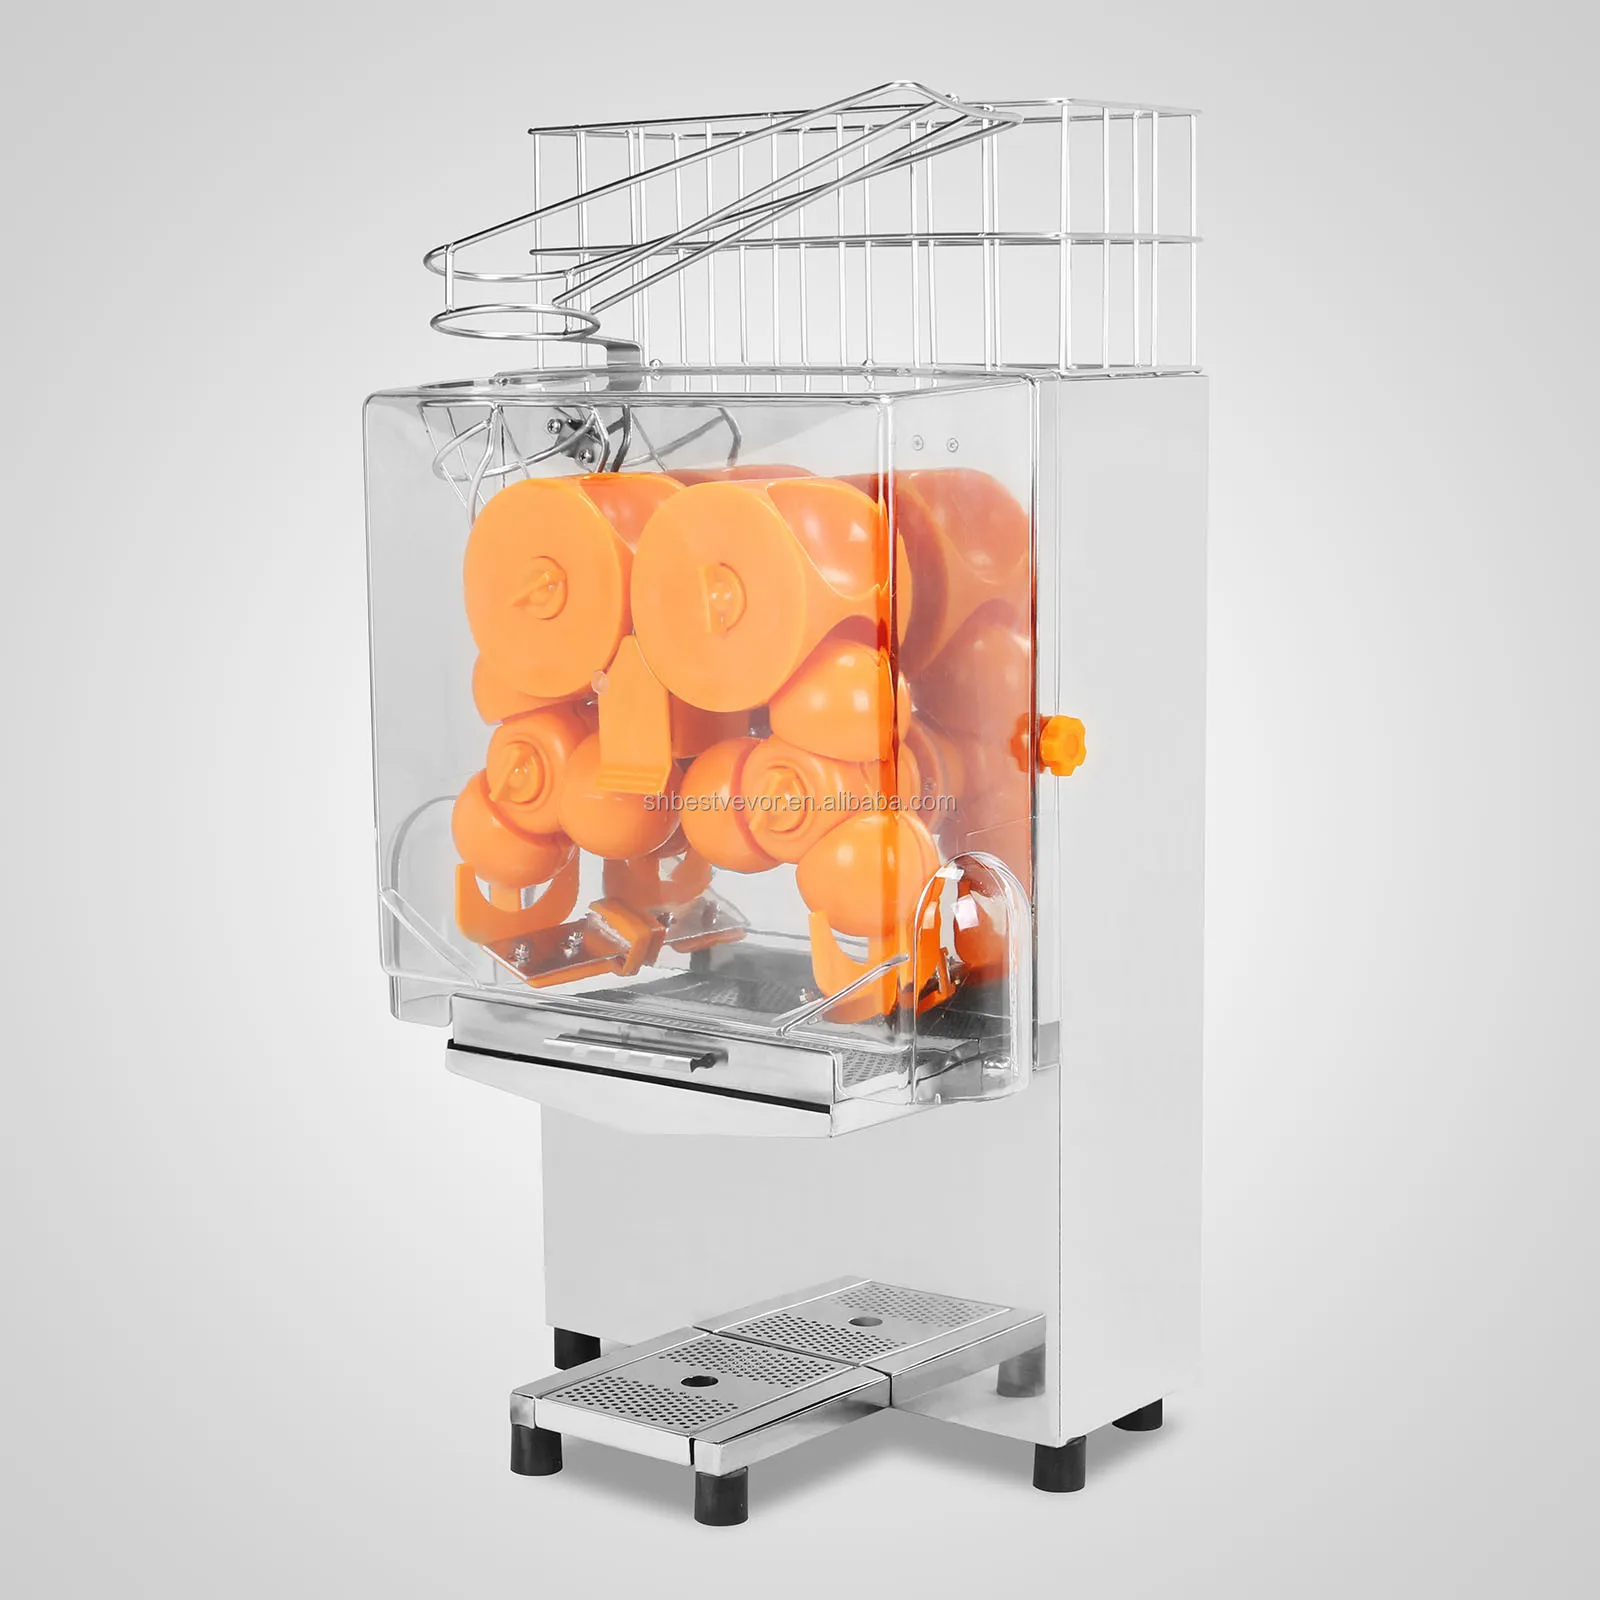 Orange Juicer Squeezer Juice Machine Commercial Juice Making 20-22 Oranges 